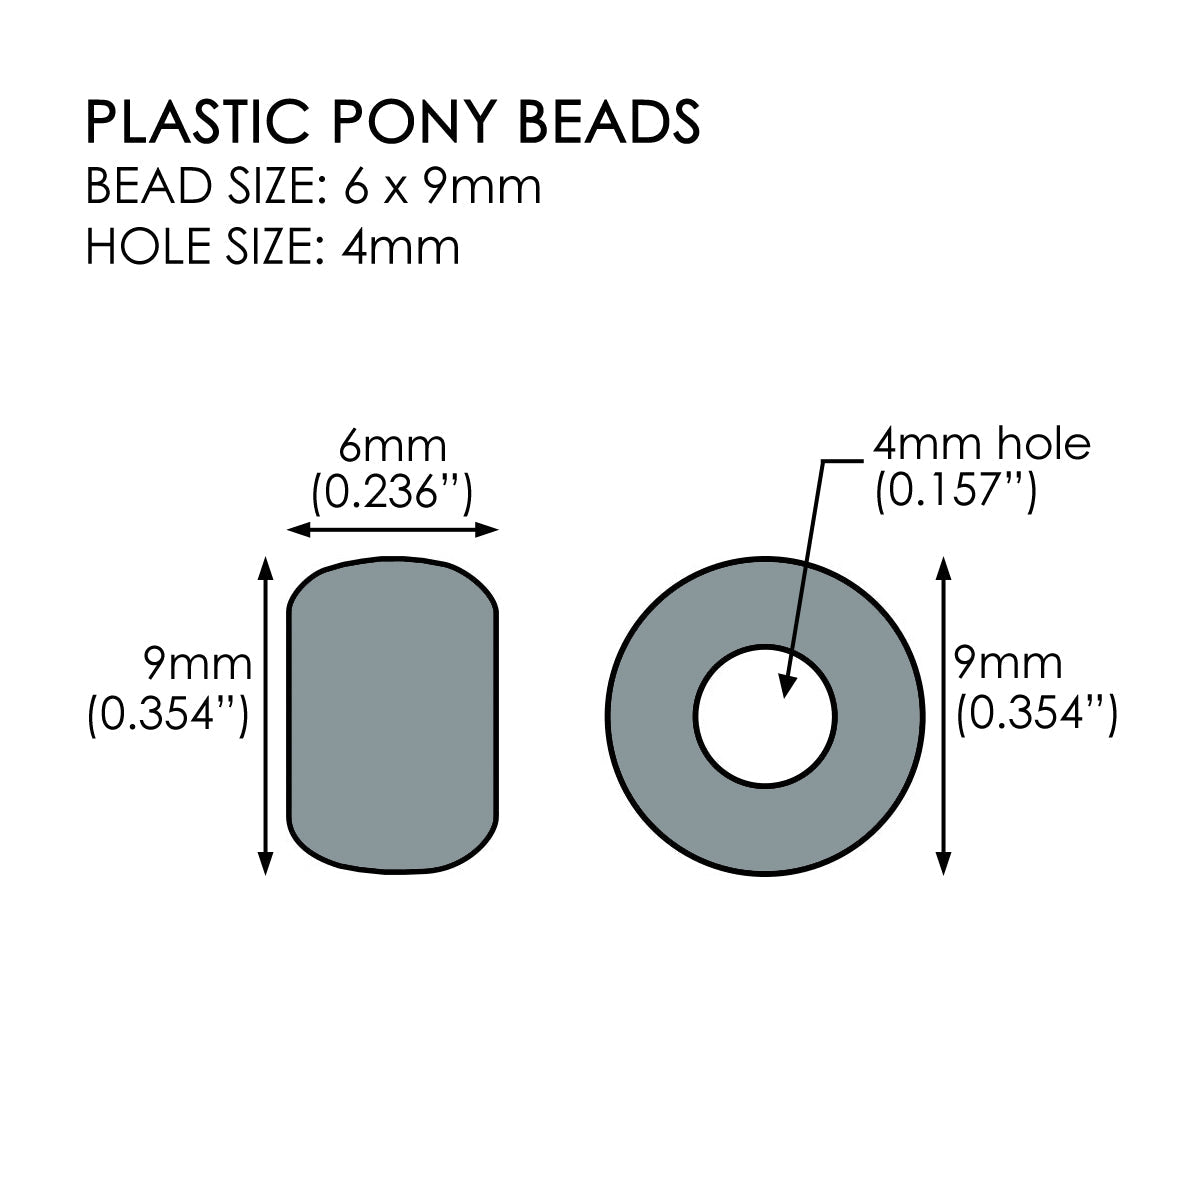 Pony Beads, Transparent, Glitter, 6x9mm, 1,000-pc, Silver glitter